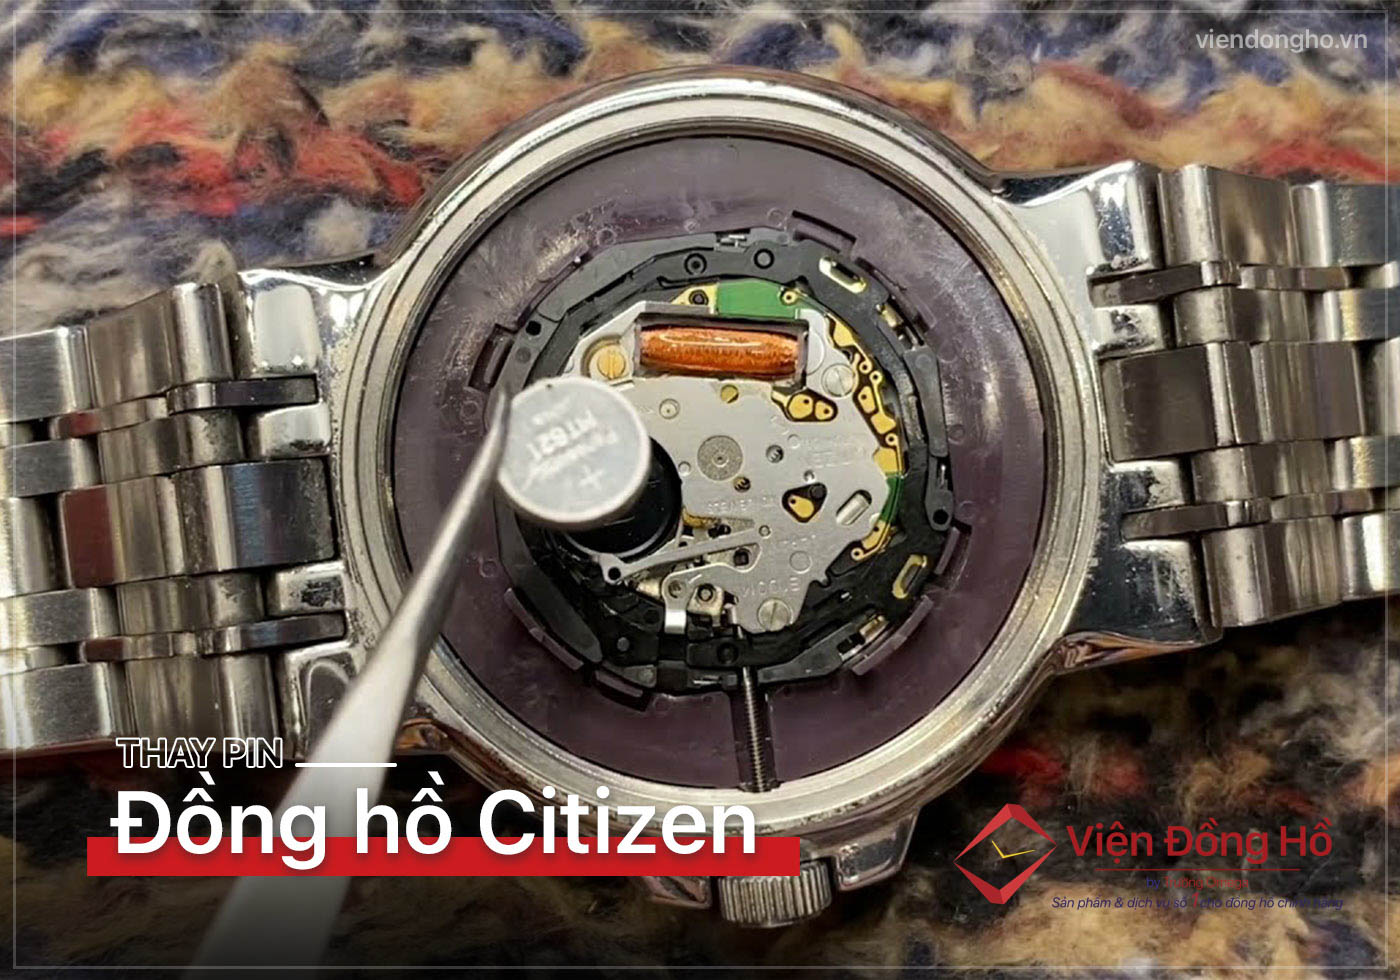 Thay pin dong ho Citizen 5